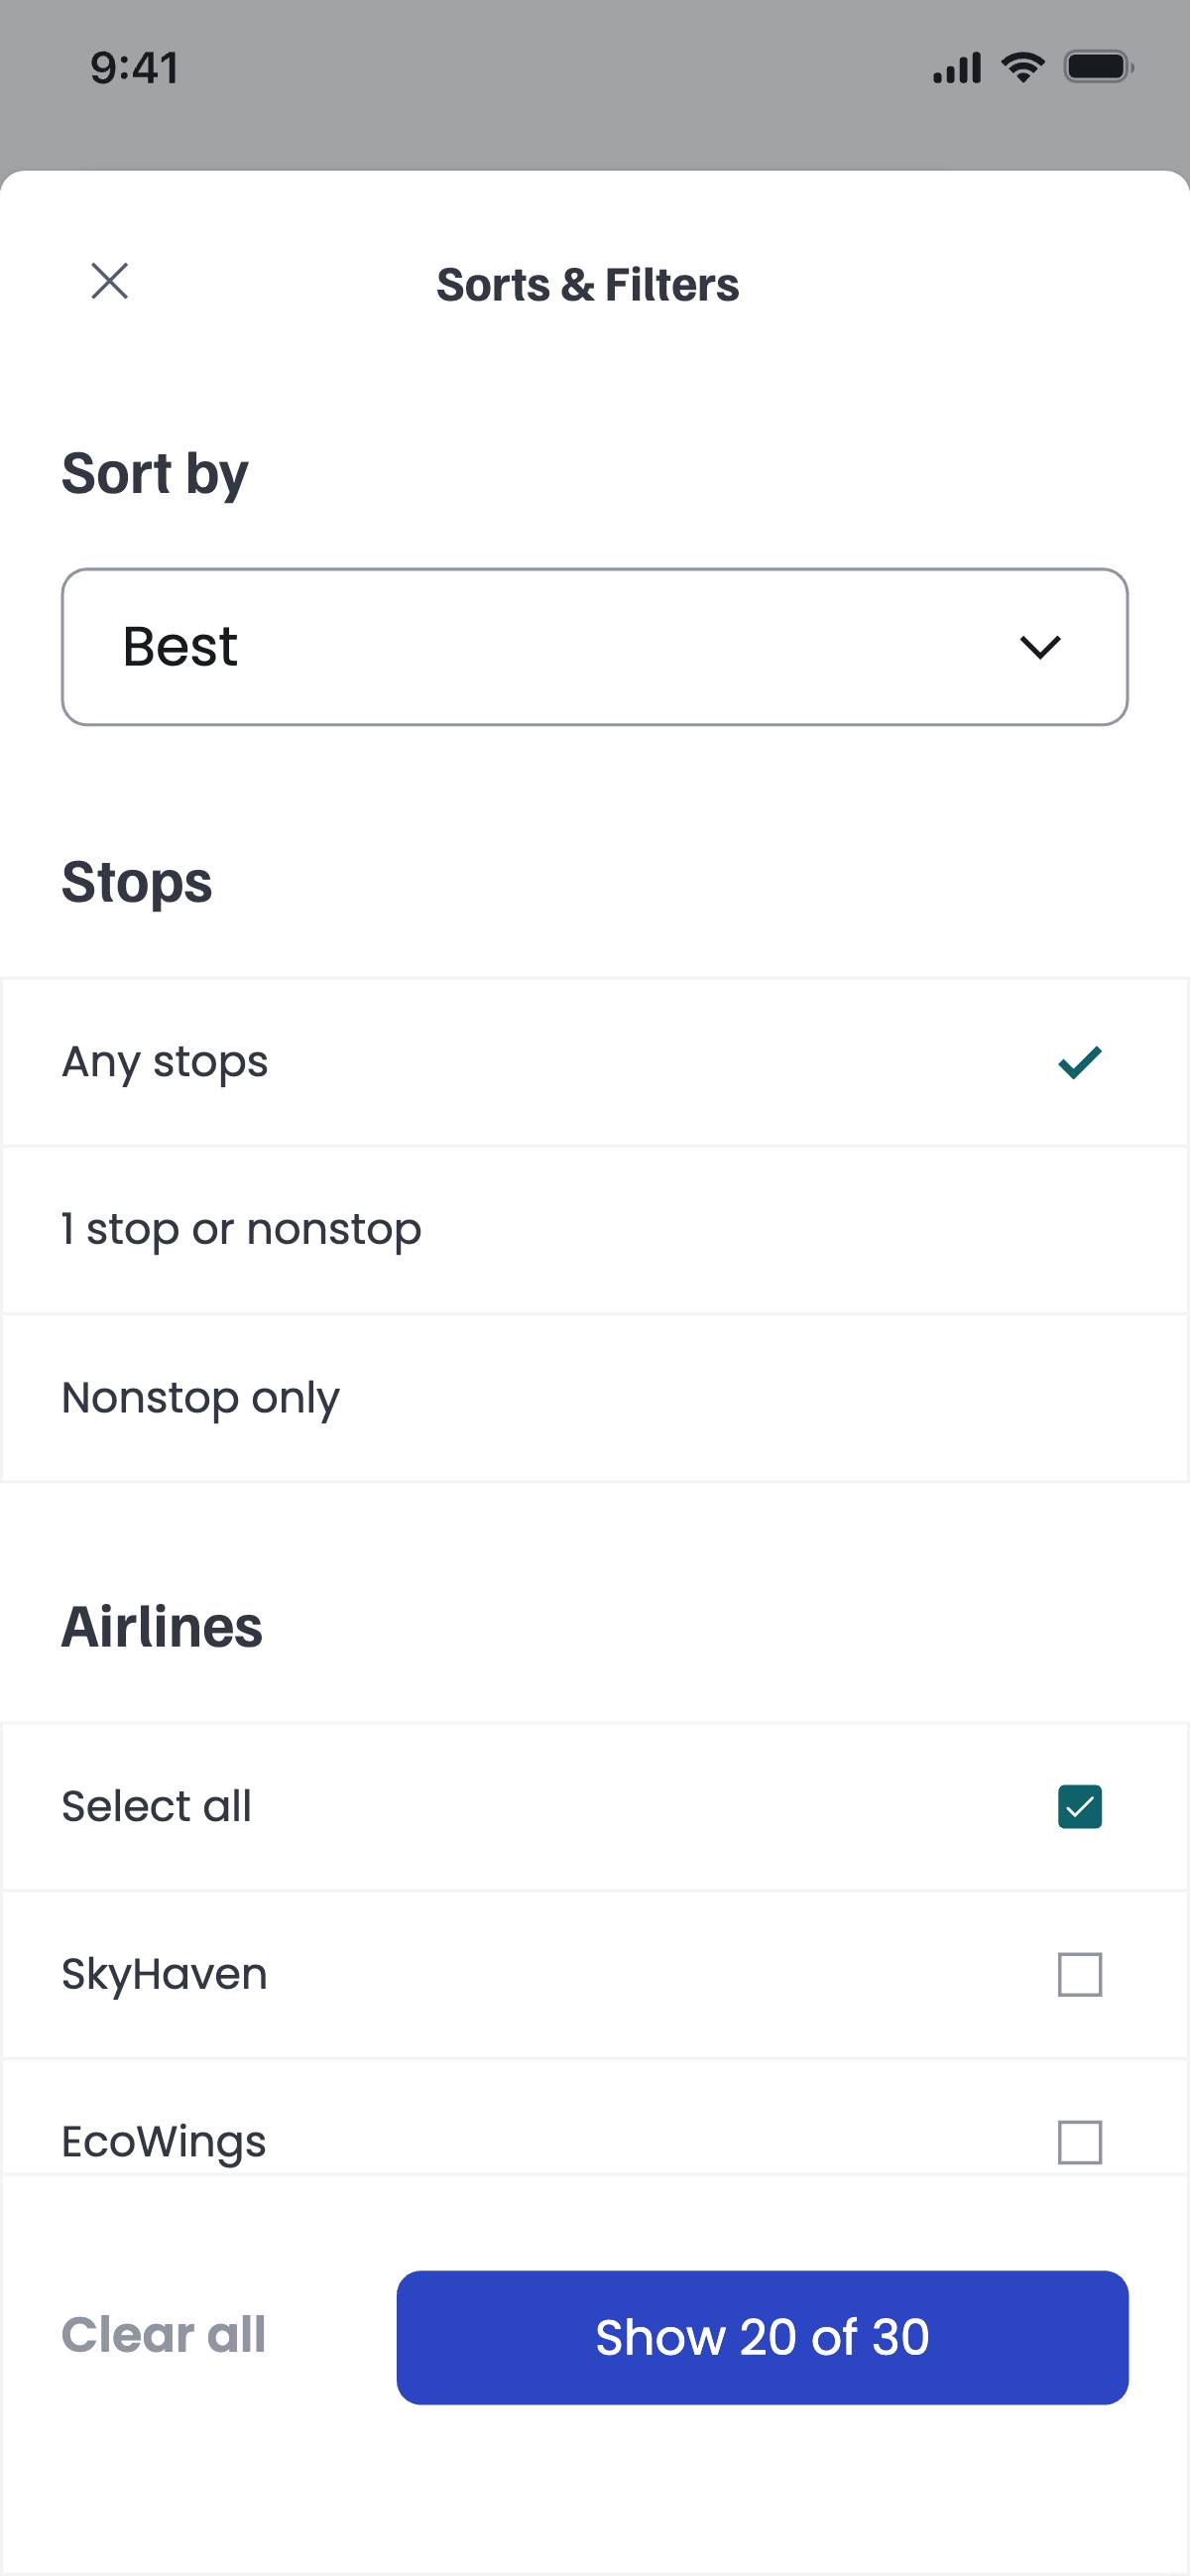 Flight booking - Filters & Sorting